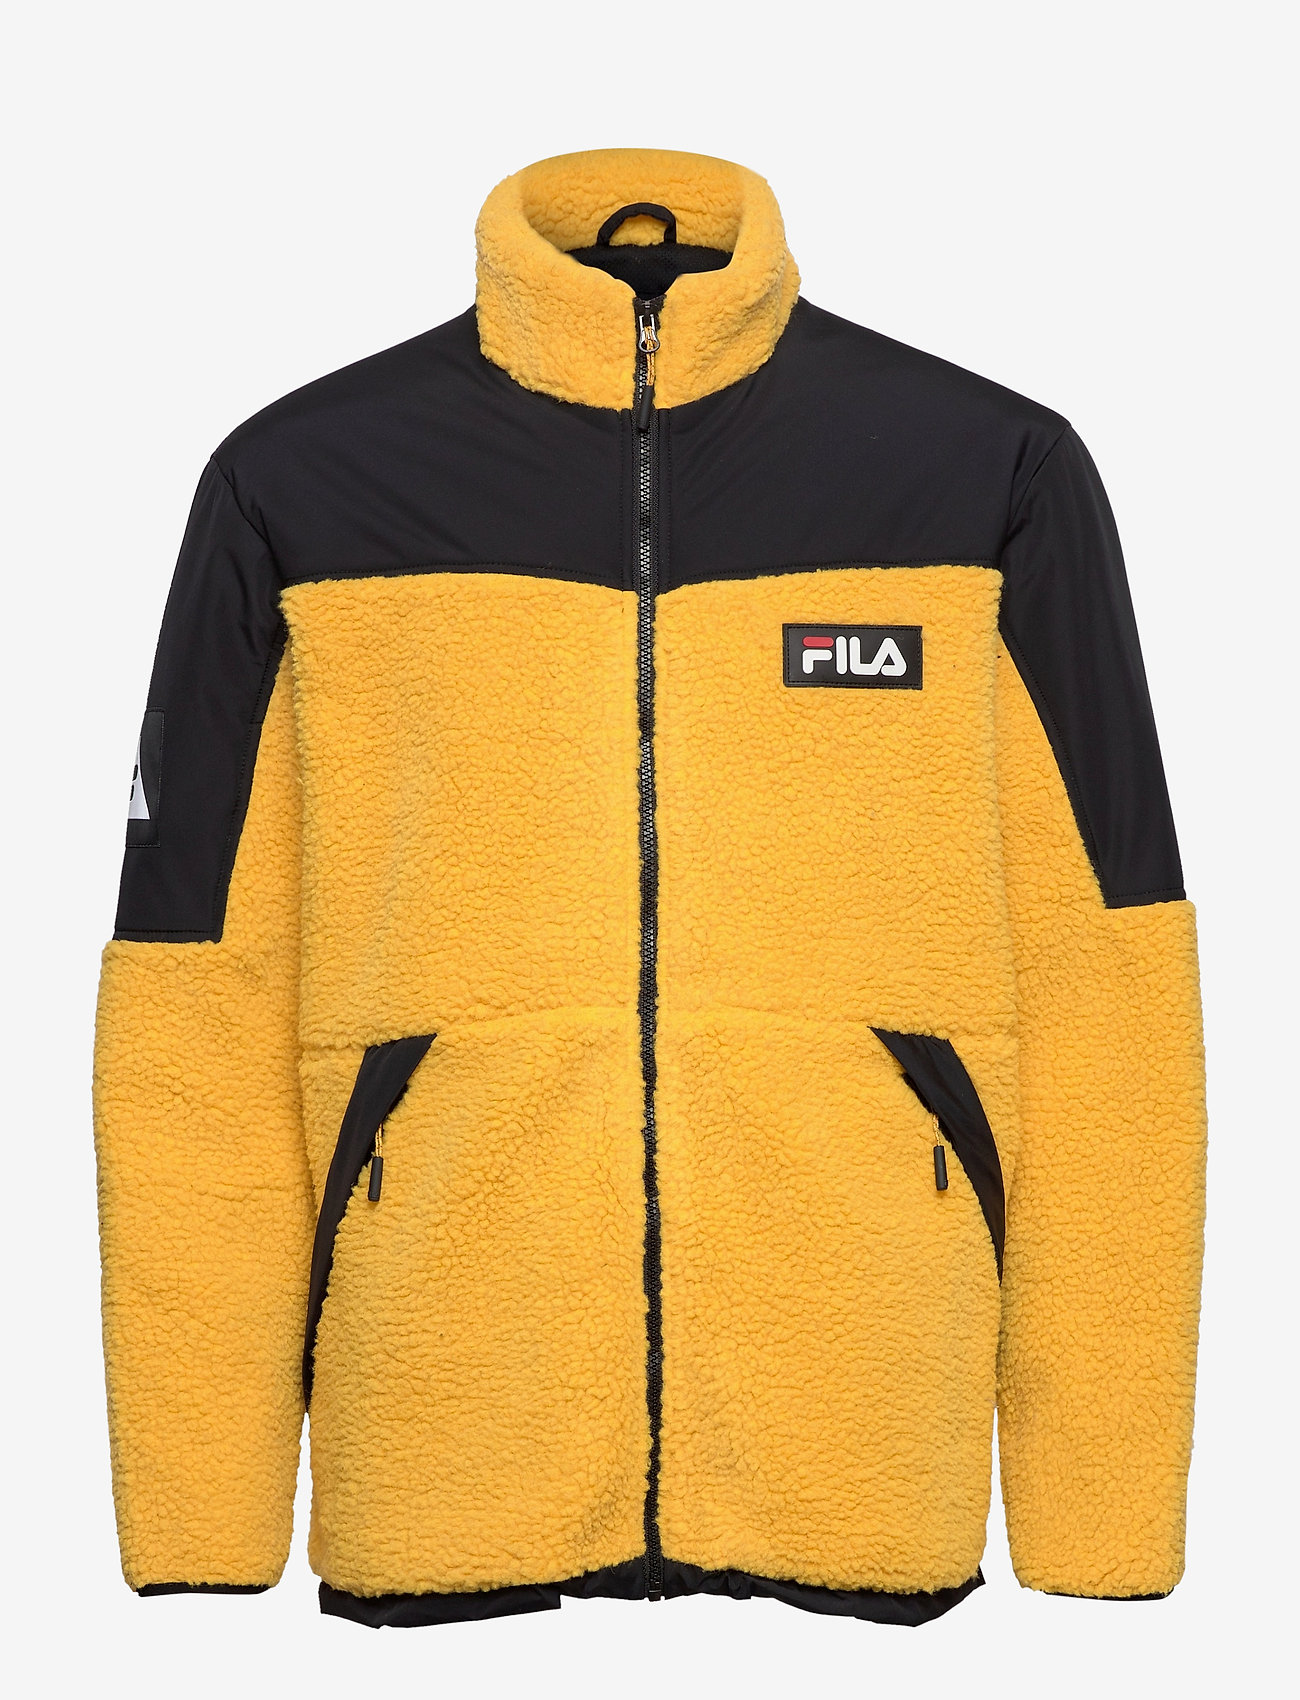 fila sherpa jacket